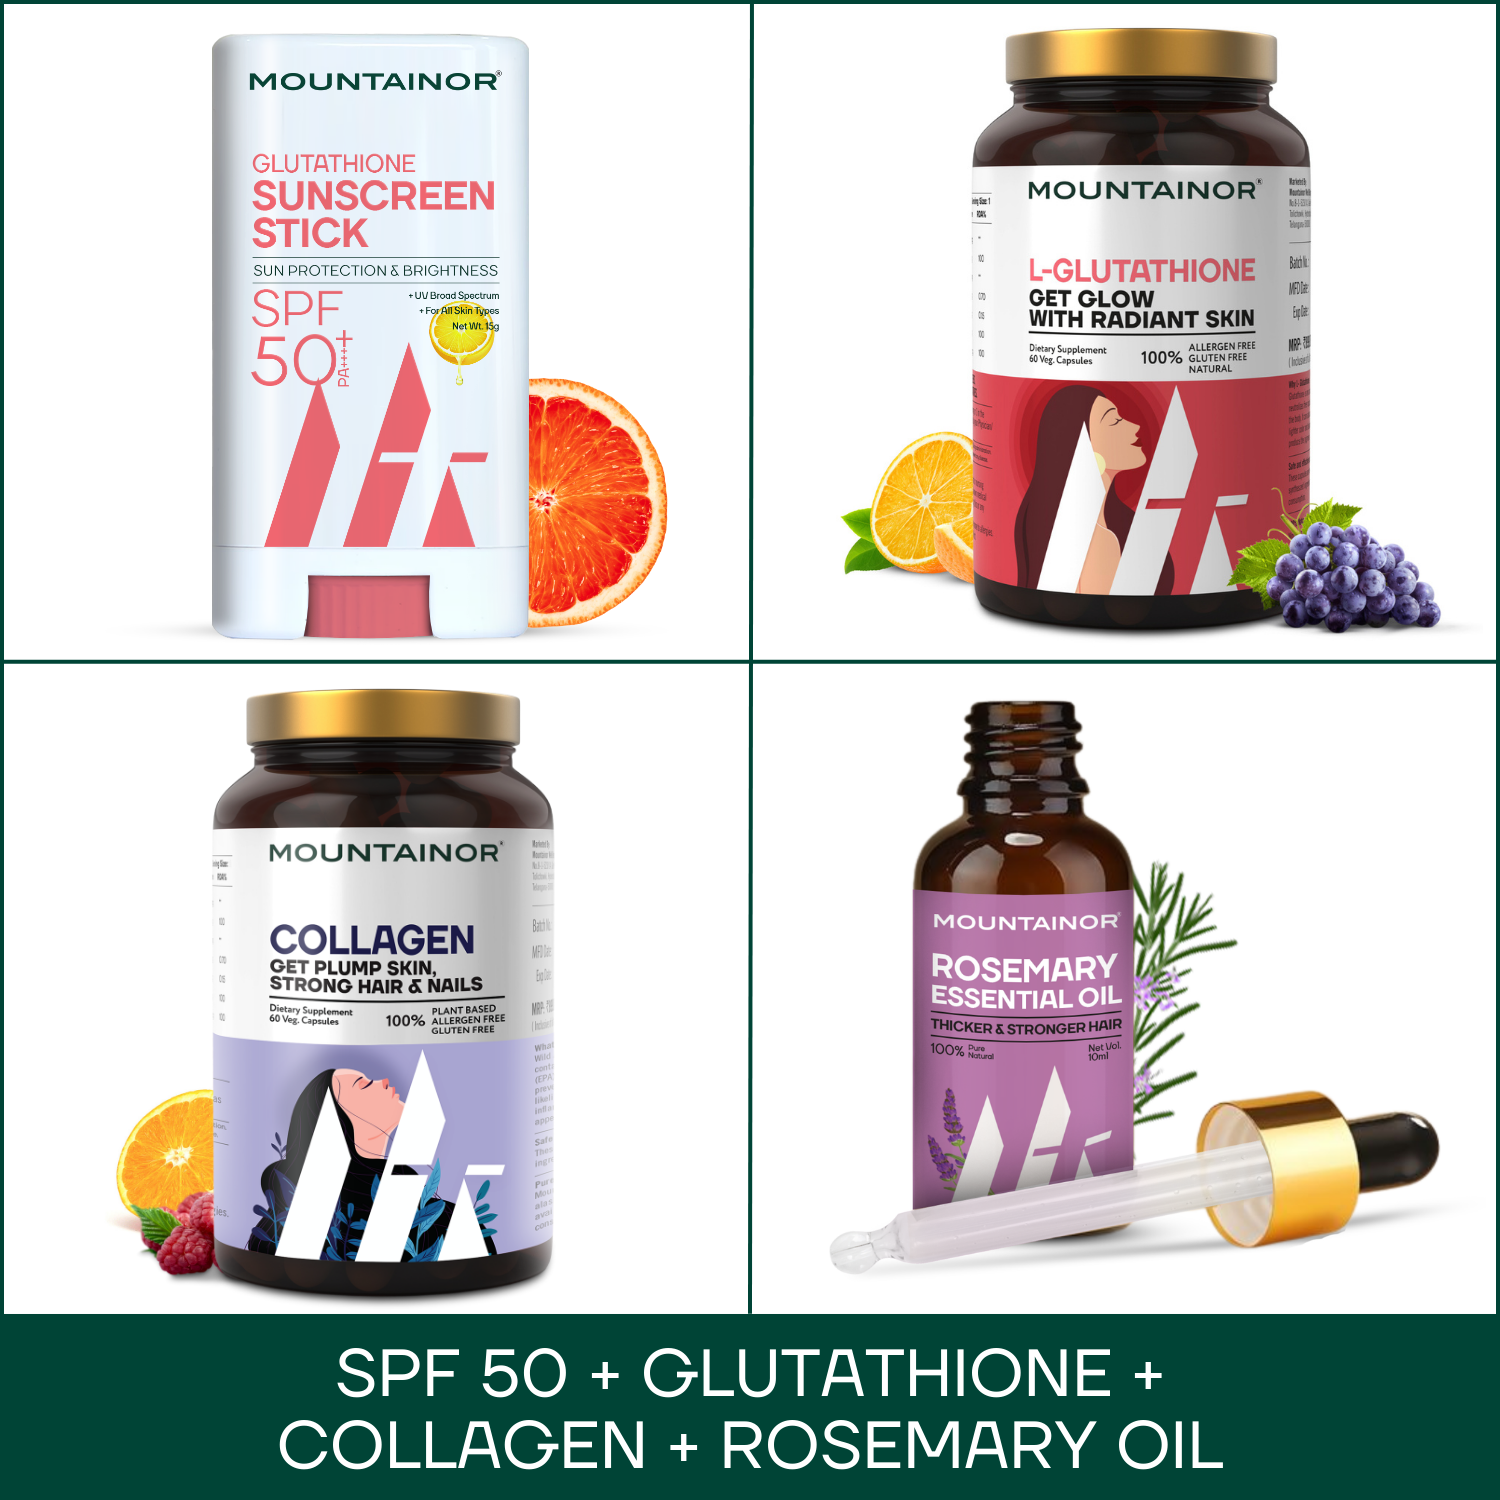 L-Glutathione Capsules+Collagen Capsules+SPF 50+ Glutathione Sunscreen Stick+Rosemary Essential Oil